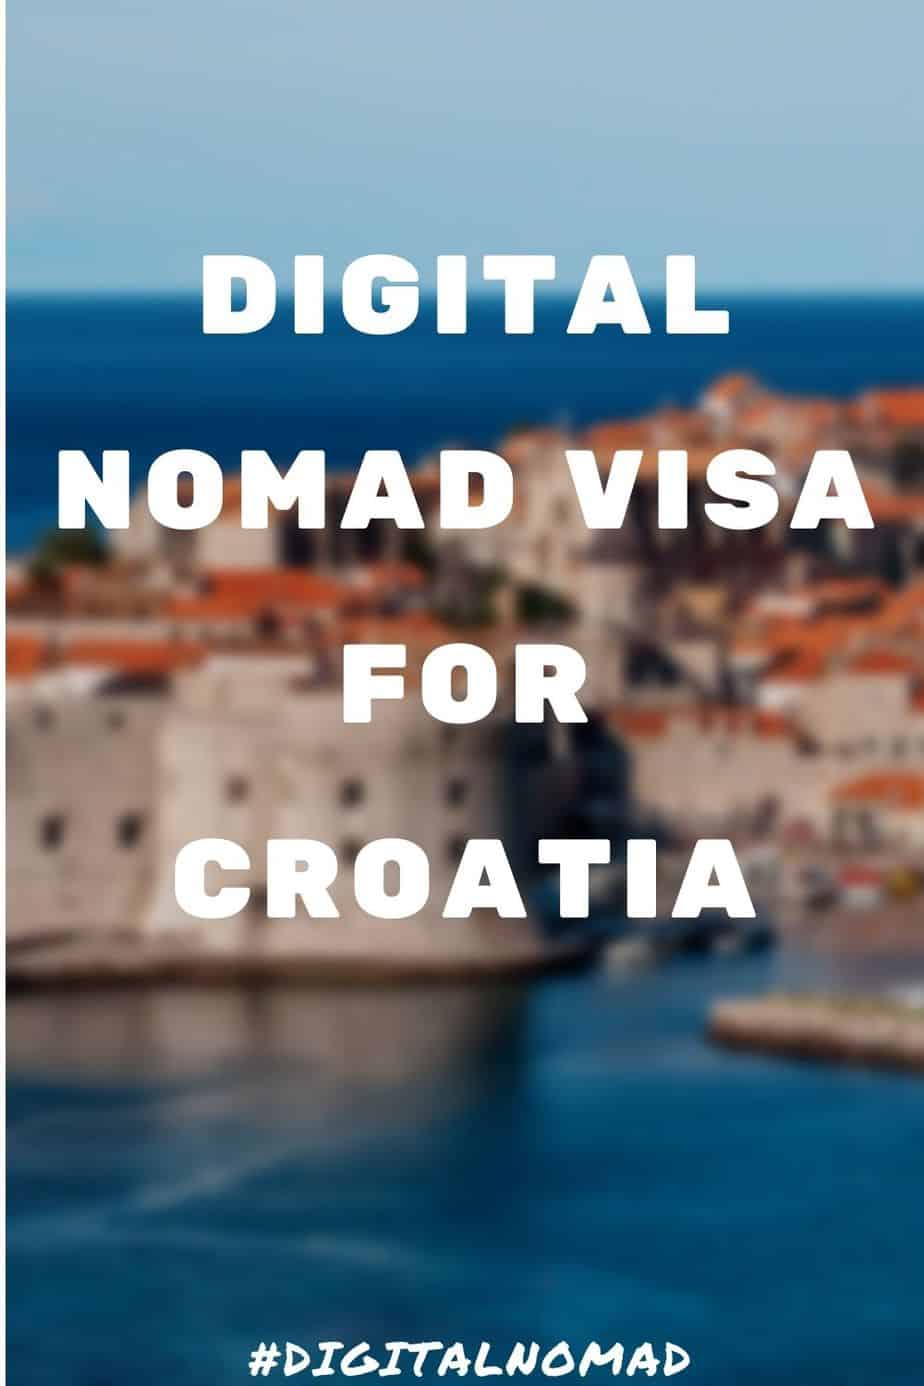 Thumbnail digital nomad visa croatia